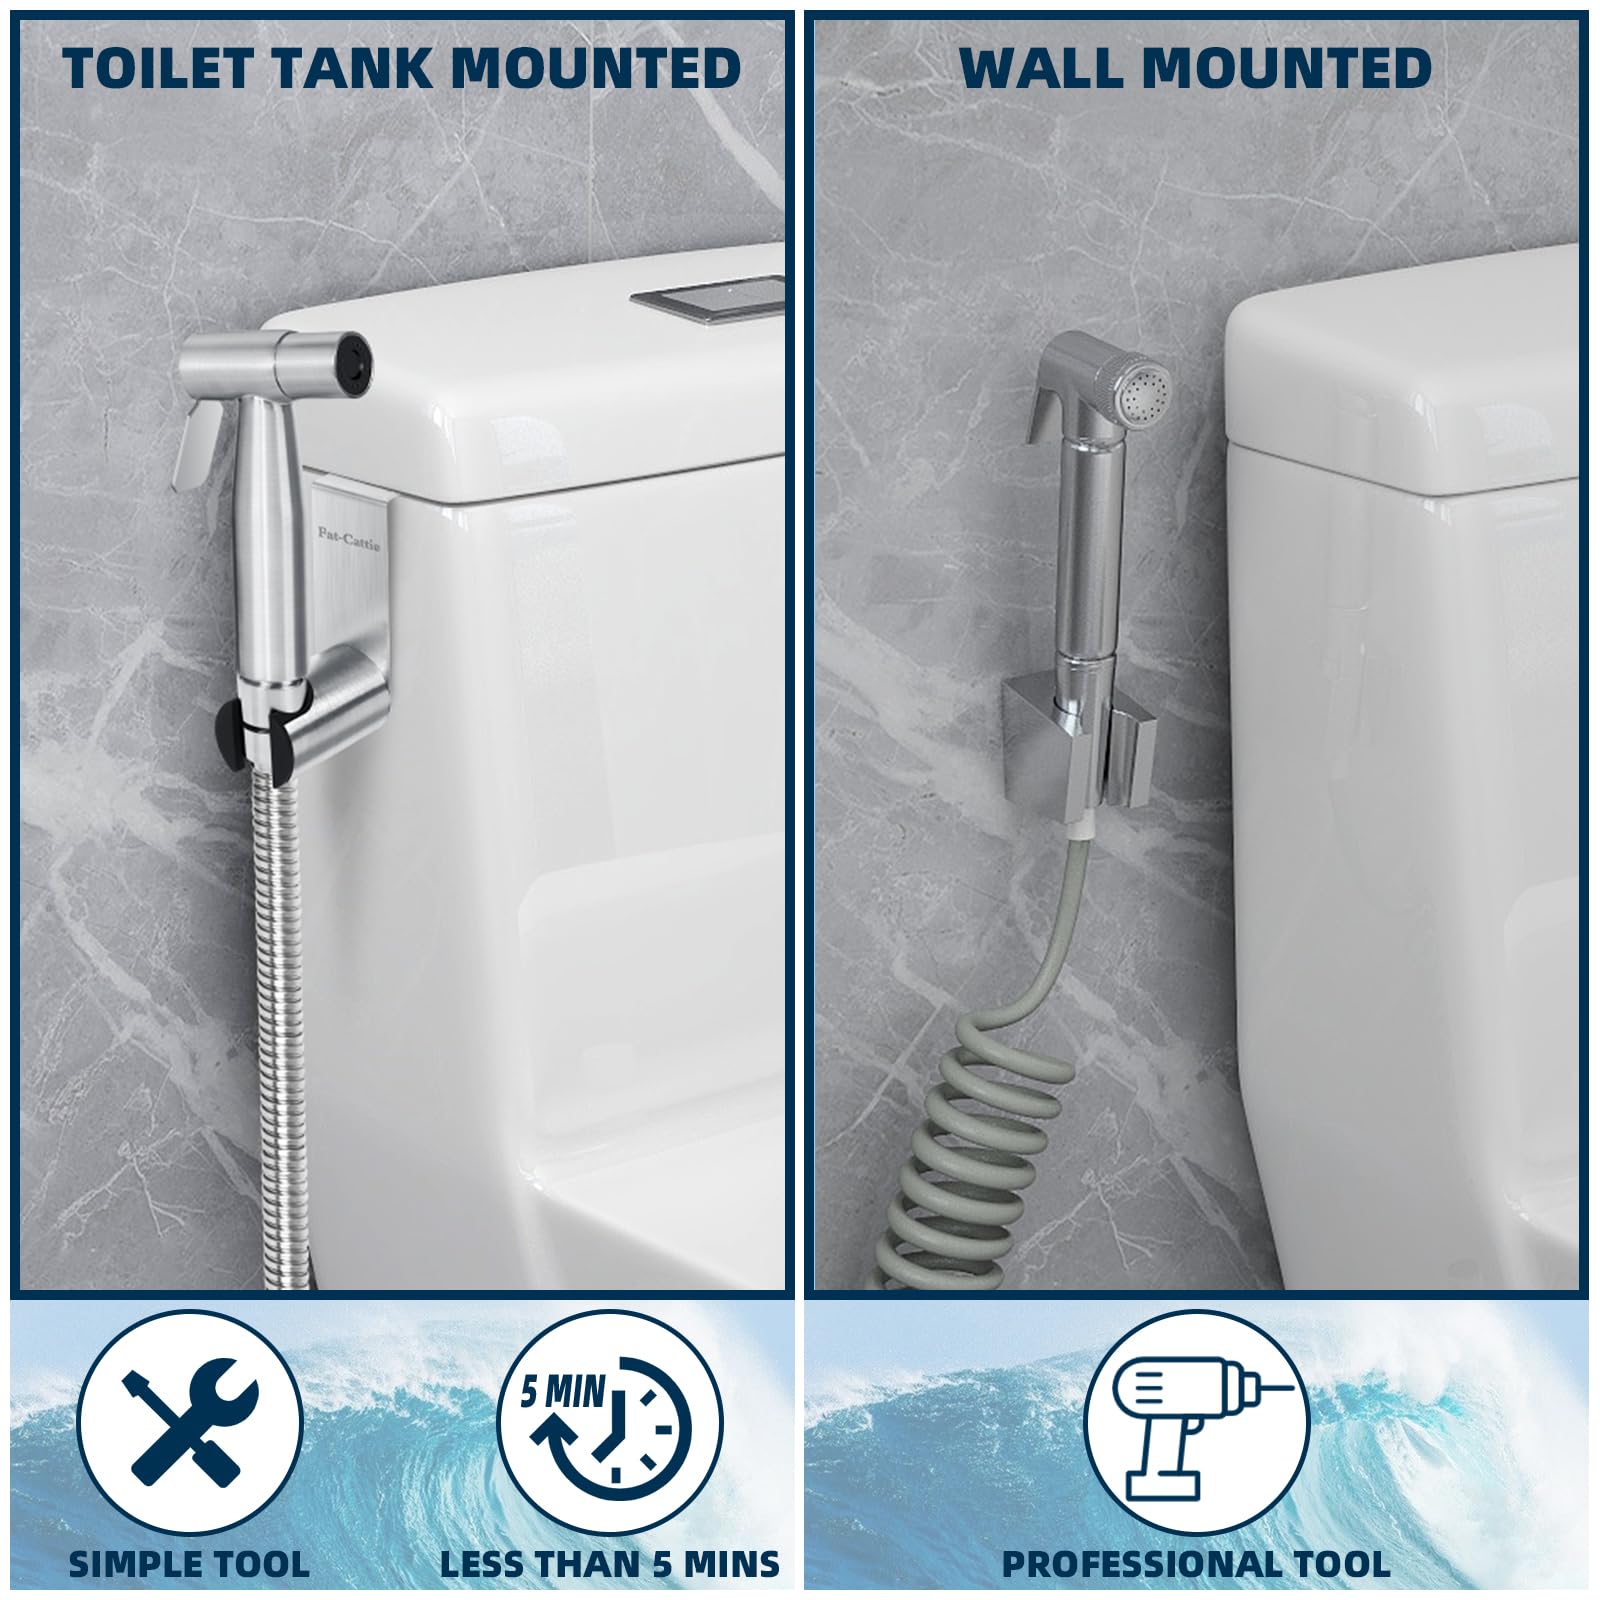 Handheld Bidet Sprayer for Toilet Portable Pet Shower Toilet Water Sprayer Seat Bidet Attachment Bathroom Stainless Steel Spray for Personal Hygiene (Hook)